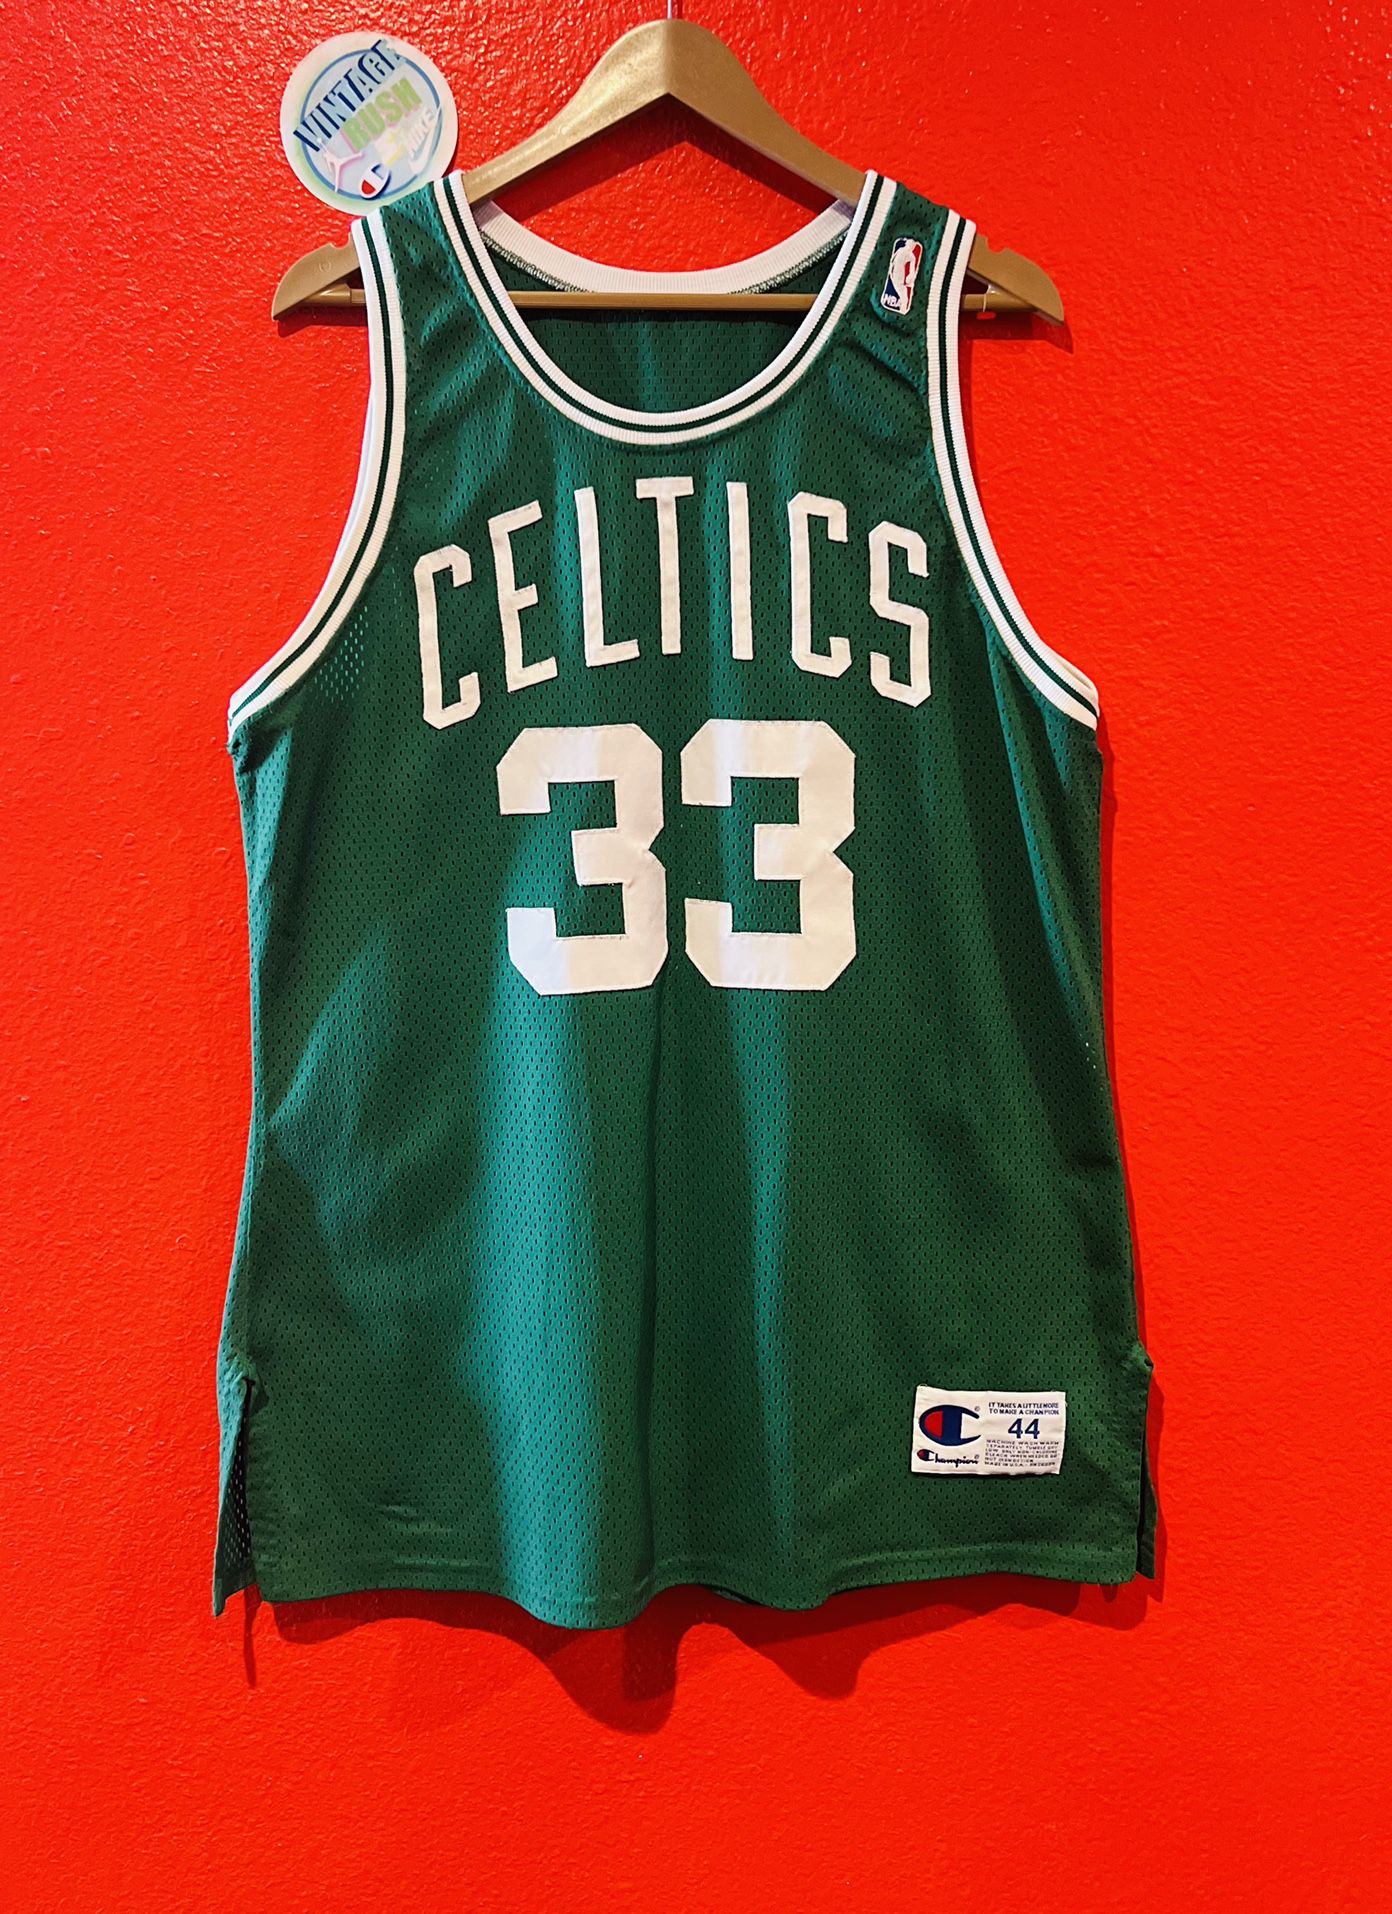 1991 Vintage Jersey Celtics Larry Bird Champion Large Red Sox Patriots 